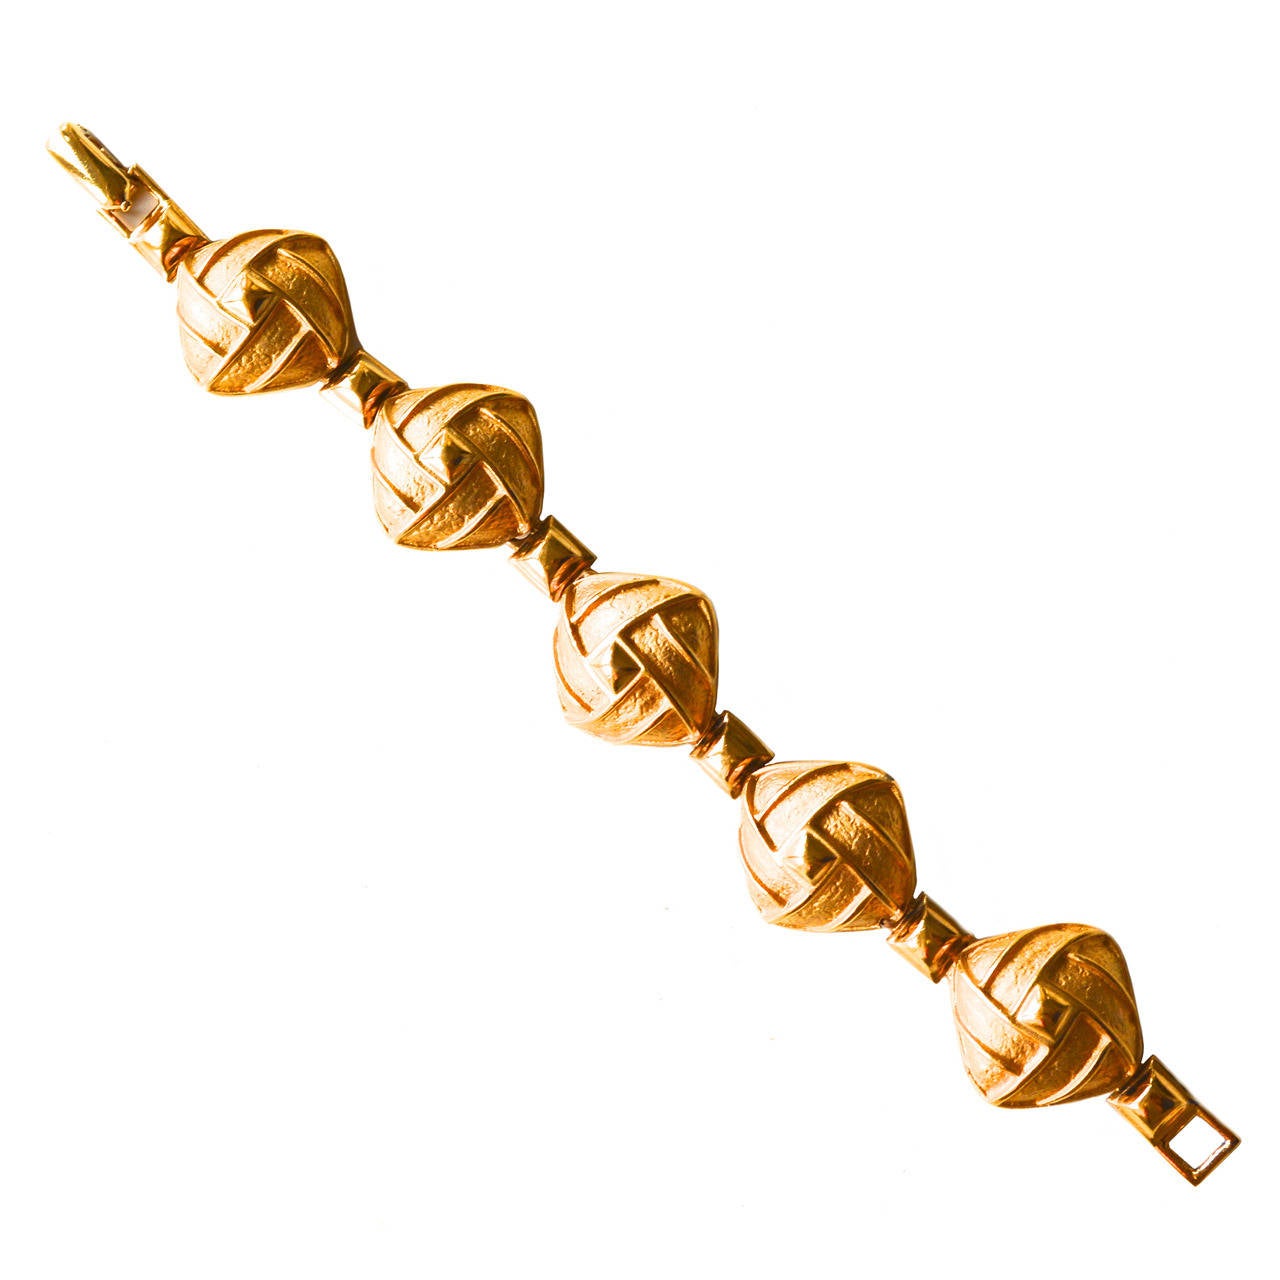 Halston Bracelet With Golden Woven Design